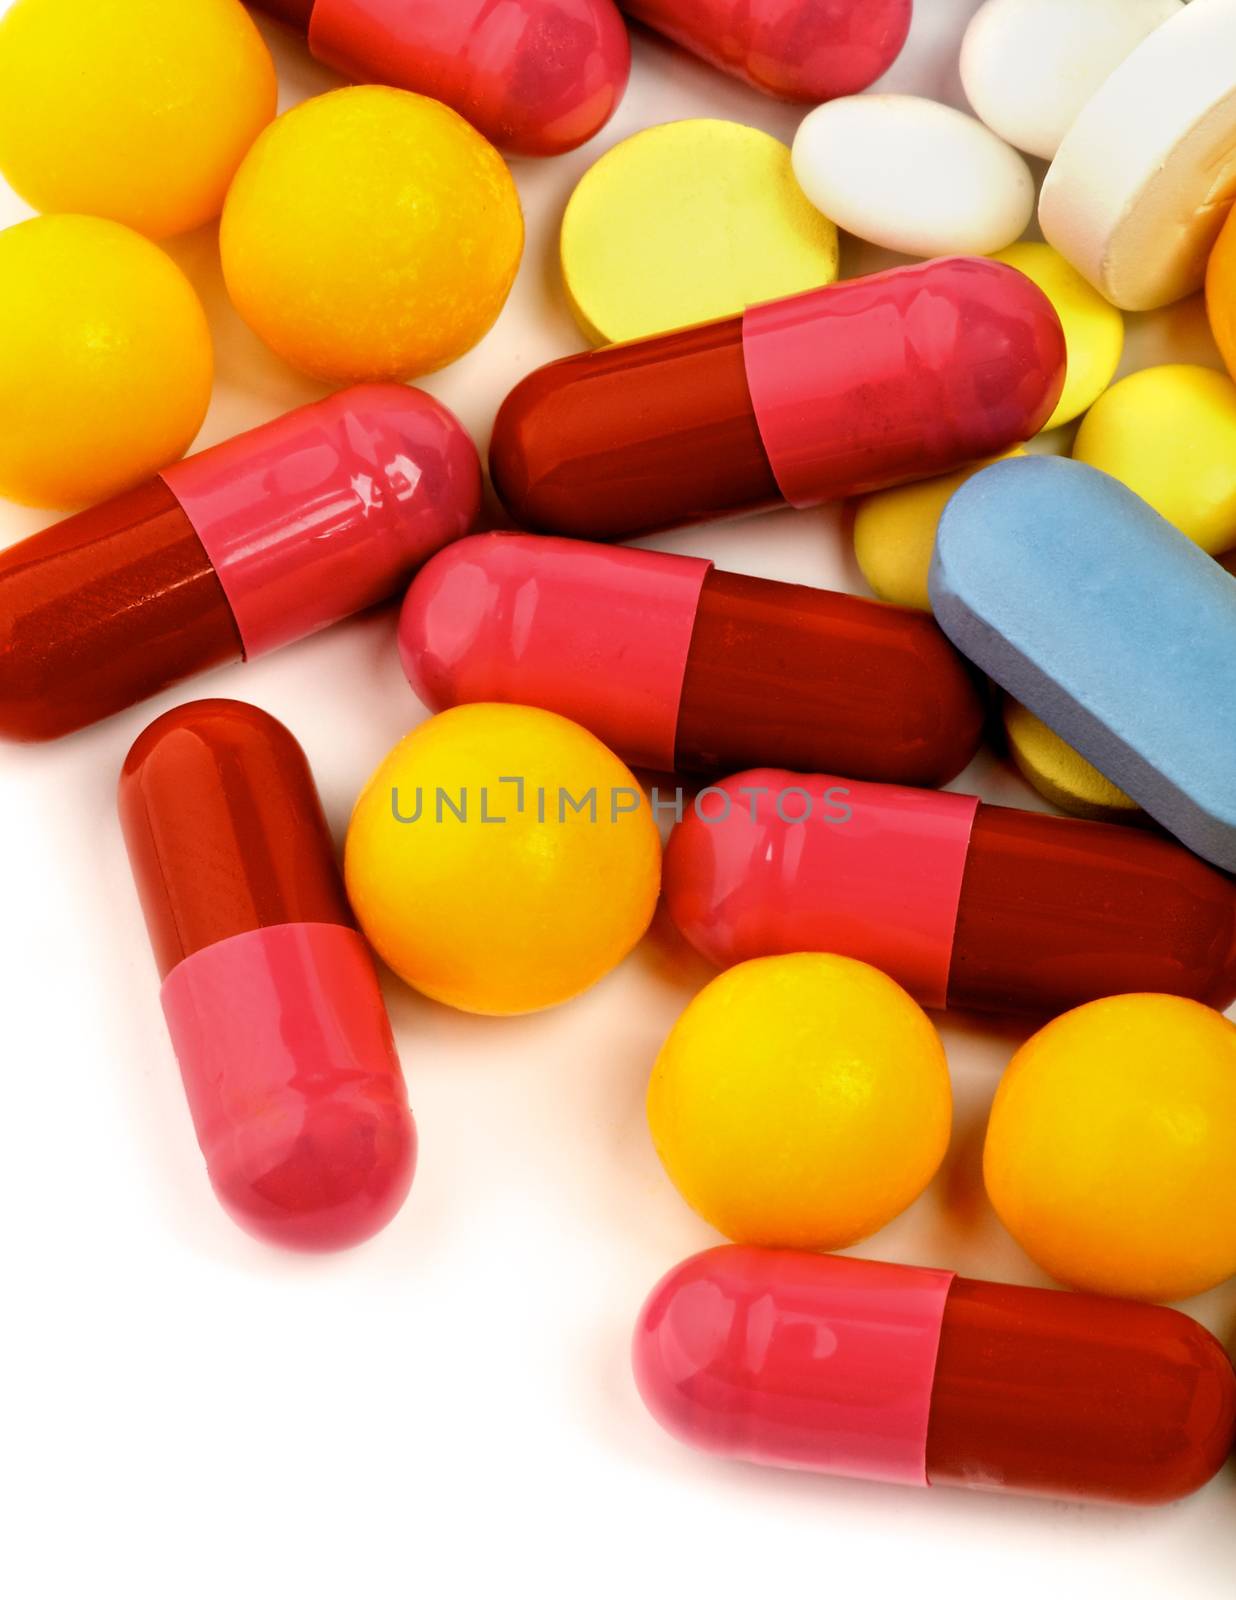 Colored Vitamin Pills by zhekos